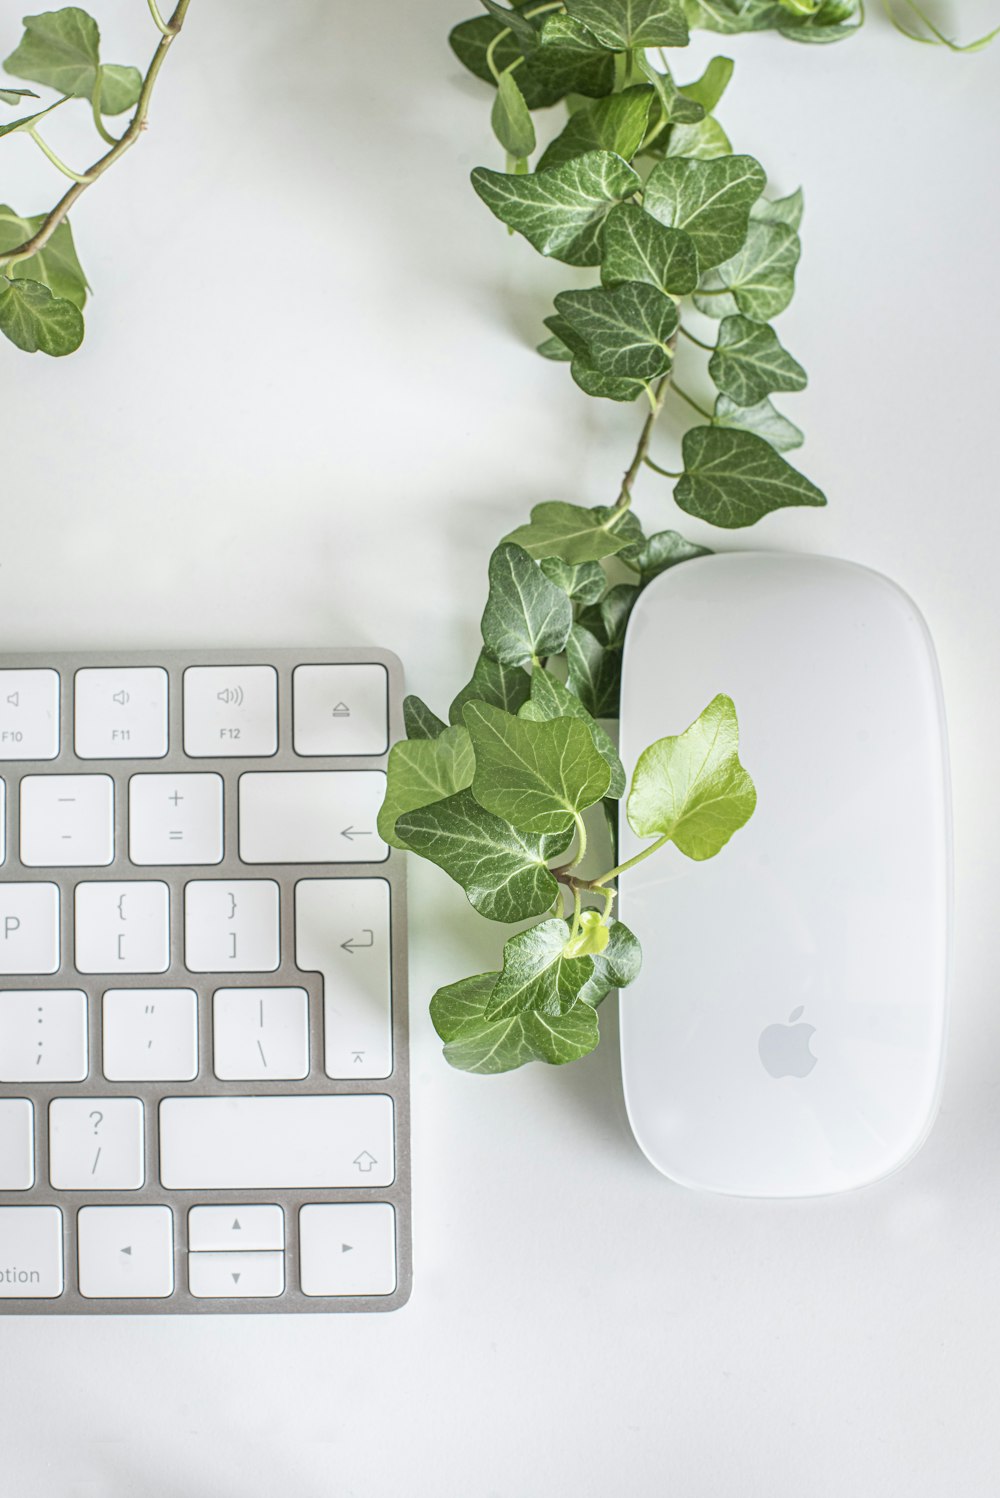 white apple magic mouse beside green leaves